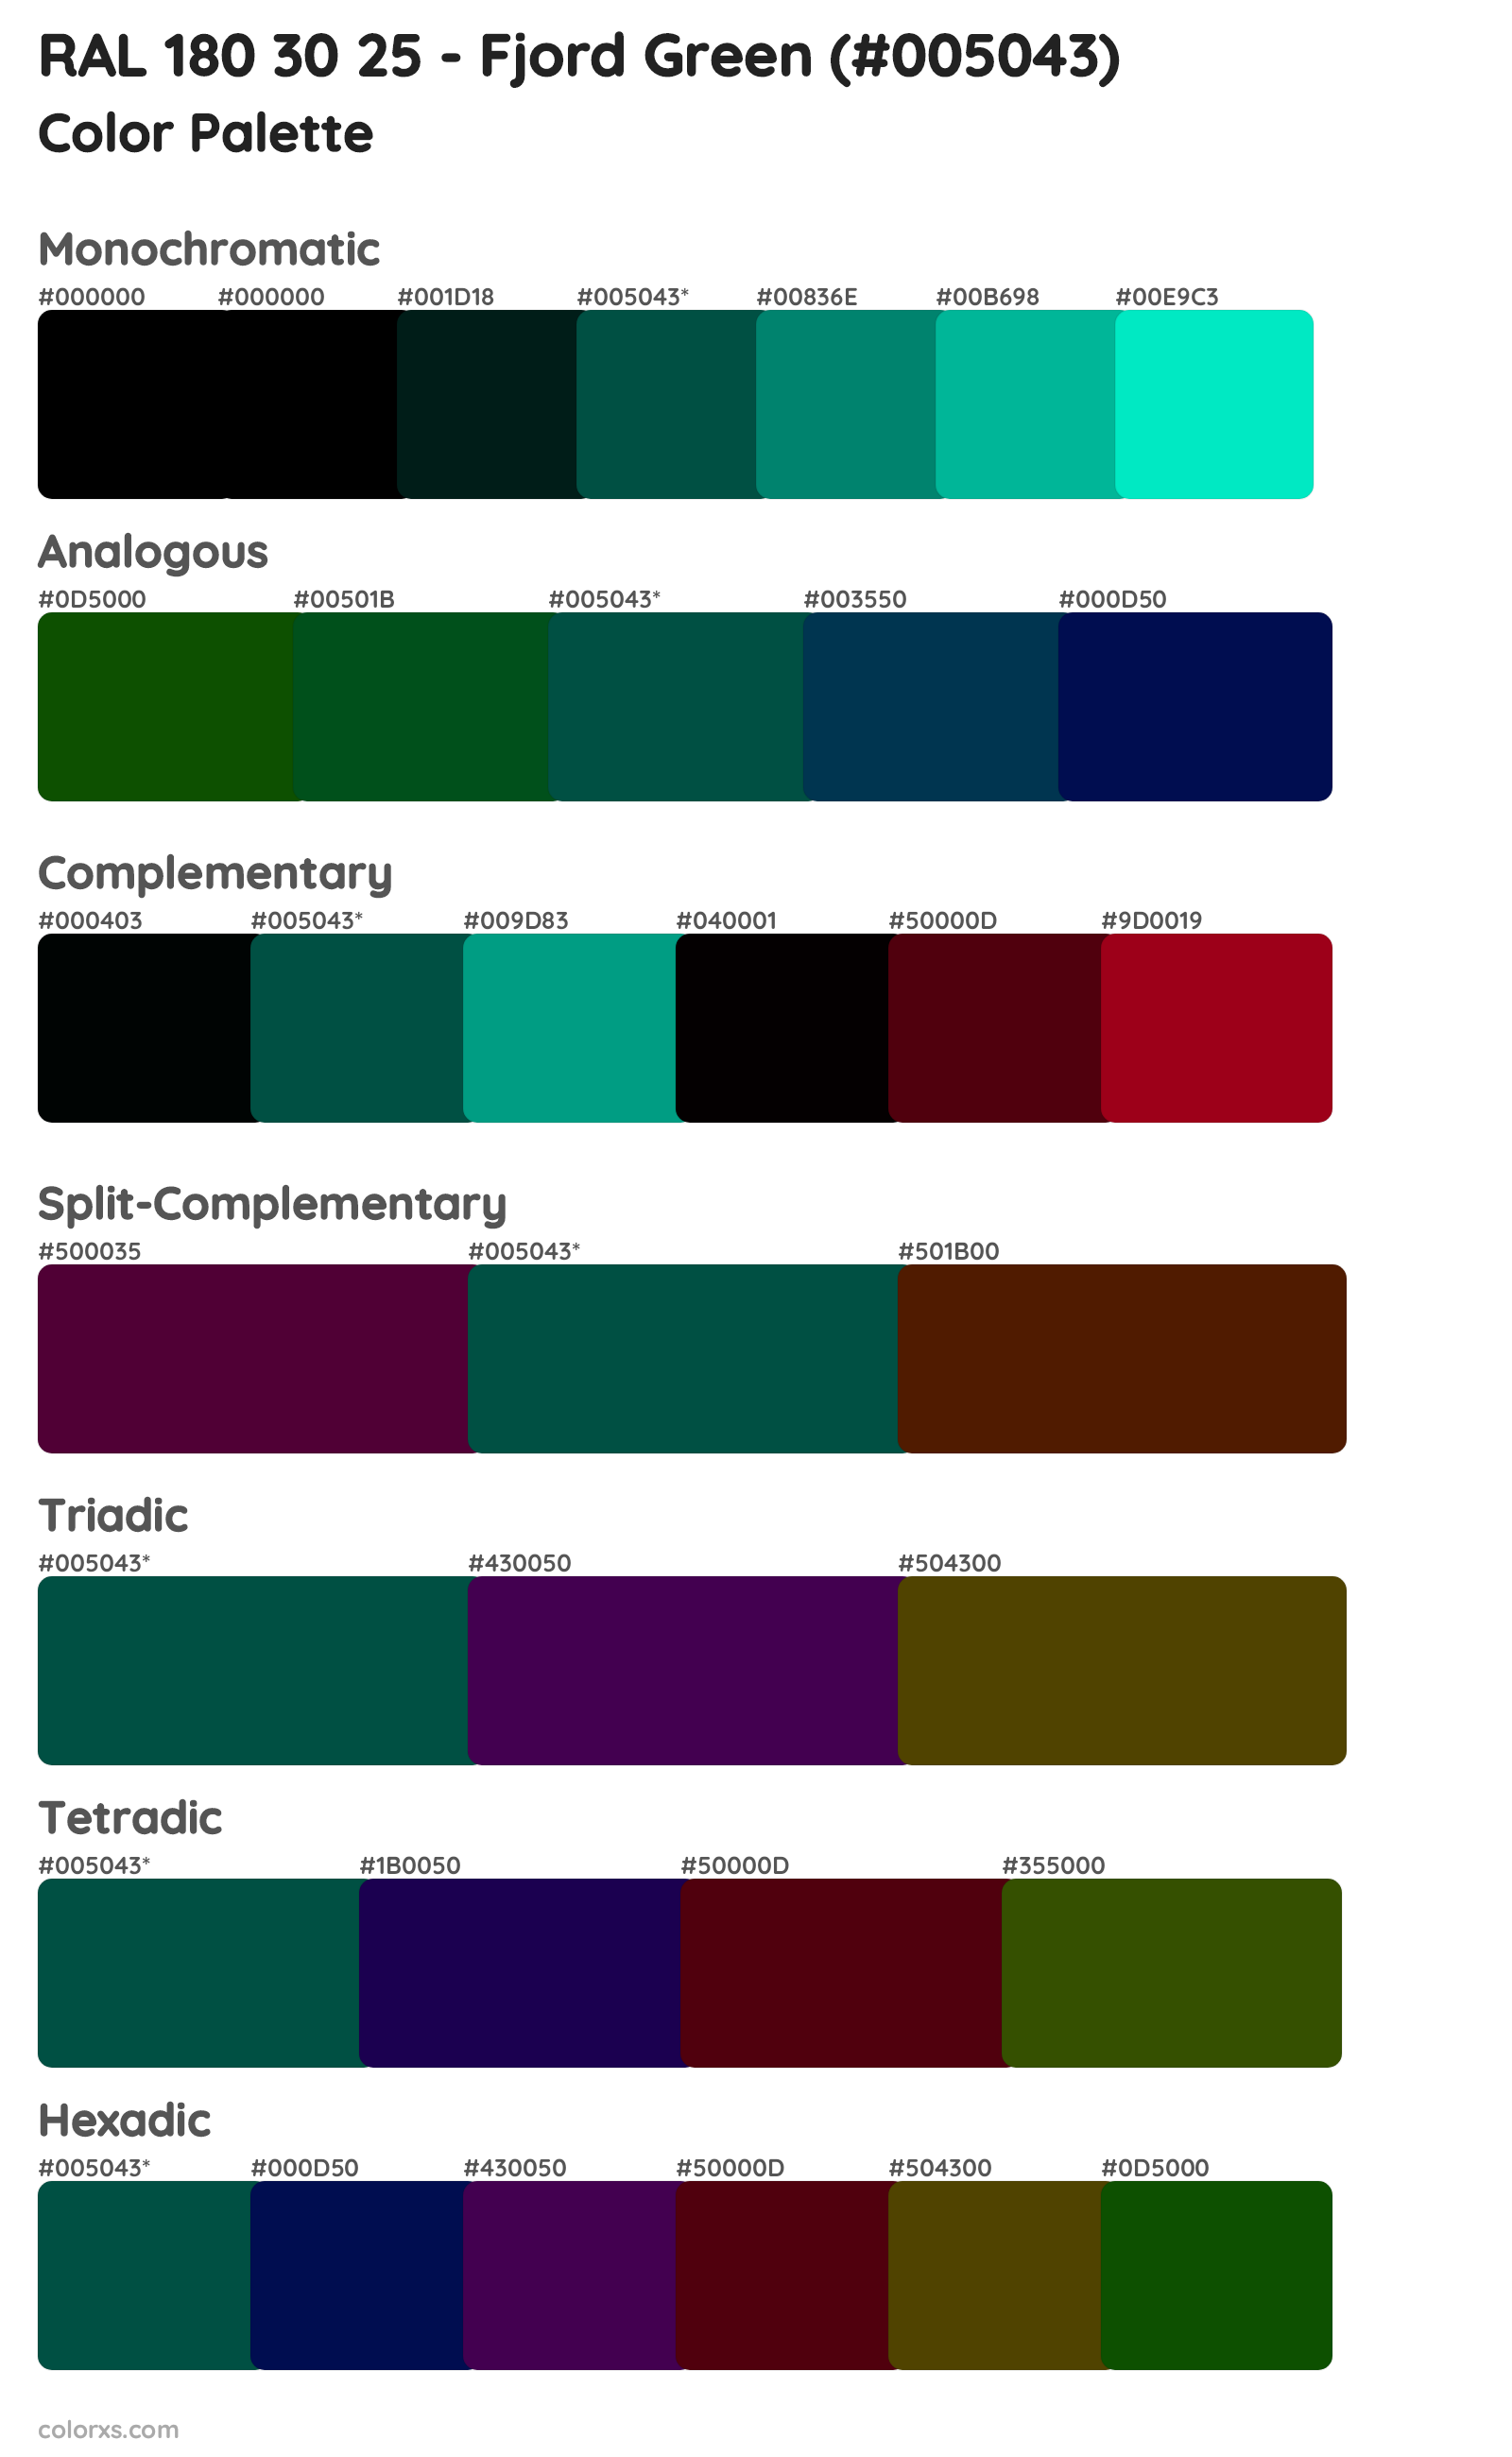 RAL 180 30 25 - Fjord Green Color Scheme Palettes